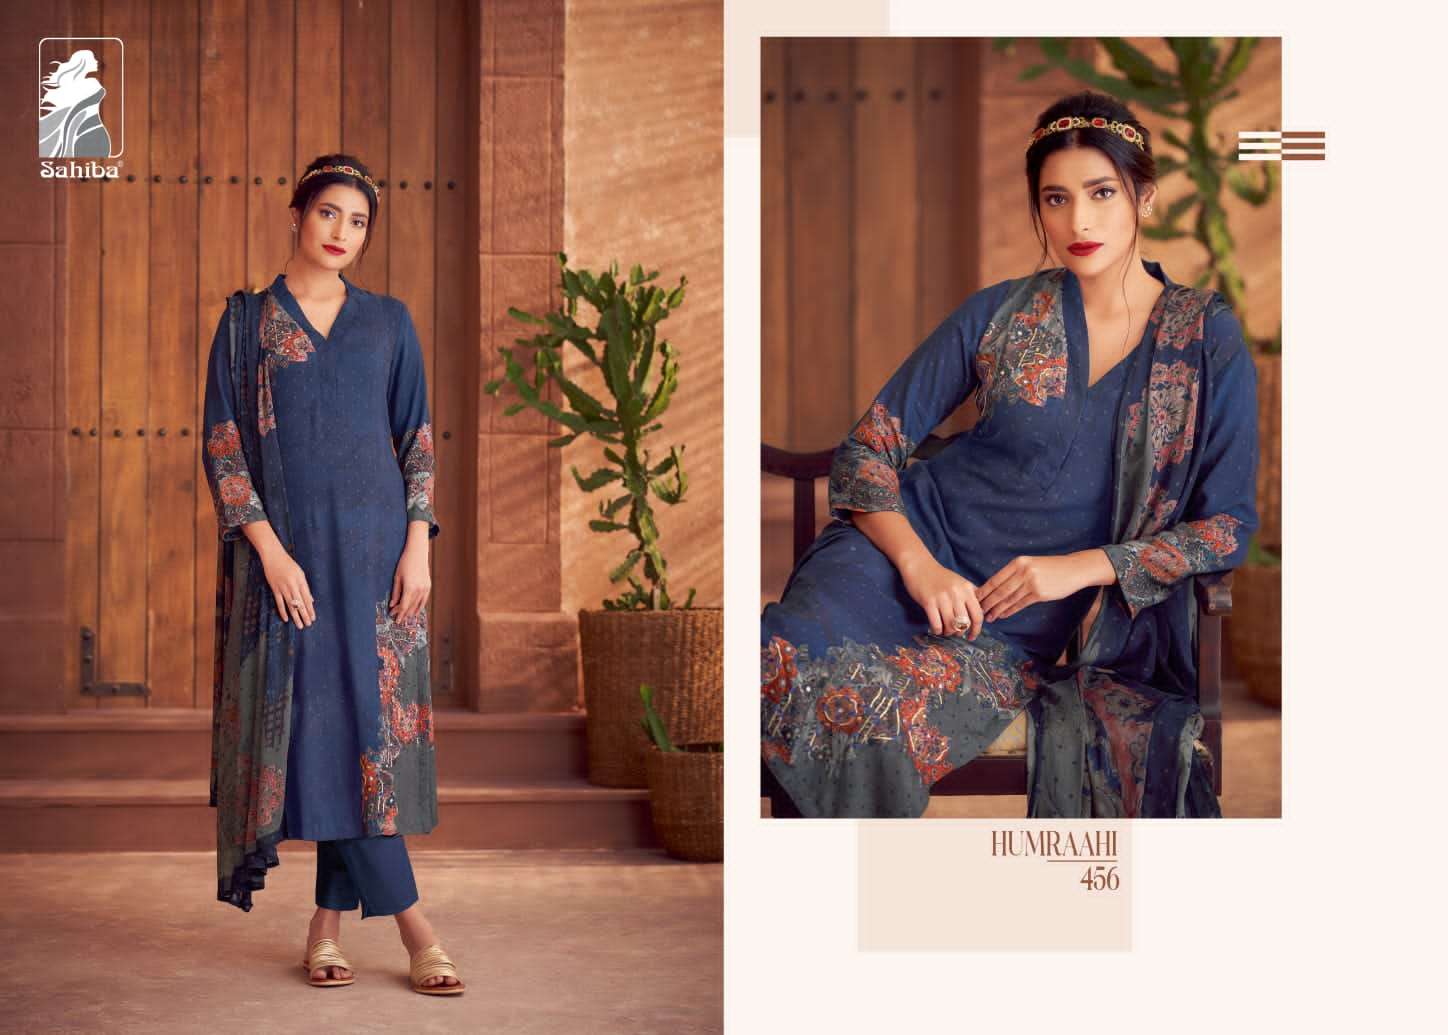 sahiba humraahi series designer latest pakistani salwar kameez wholesaler surat gujarat